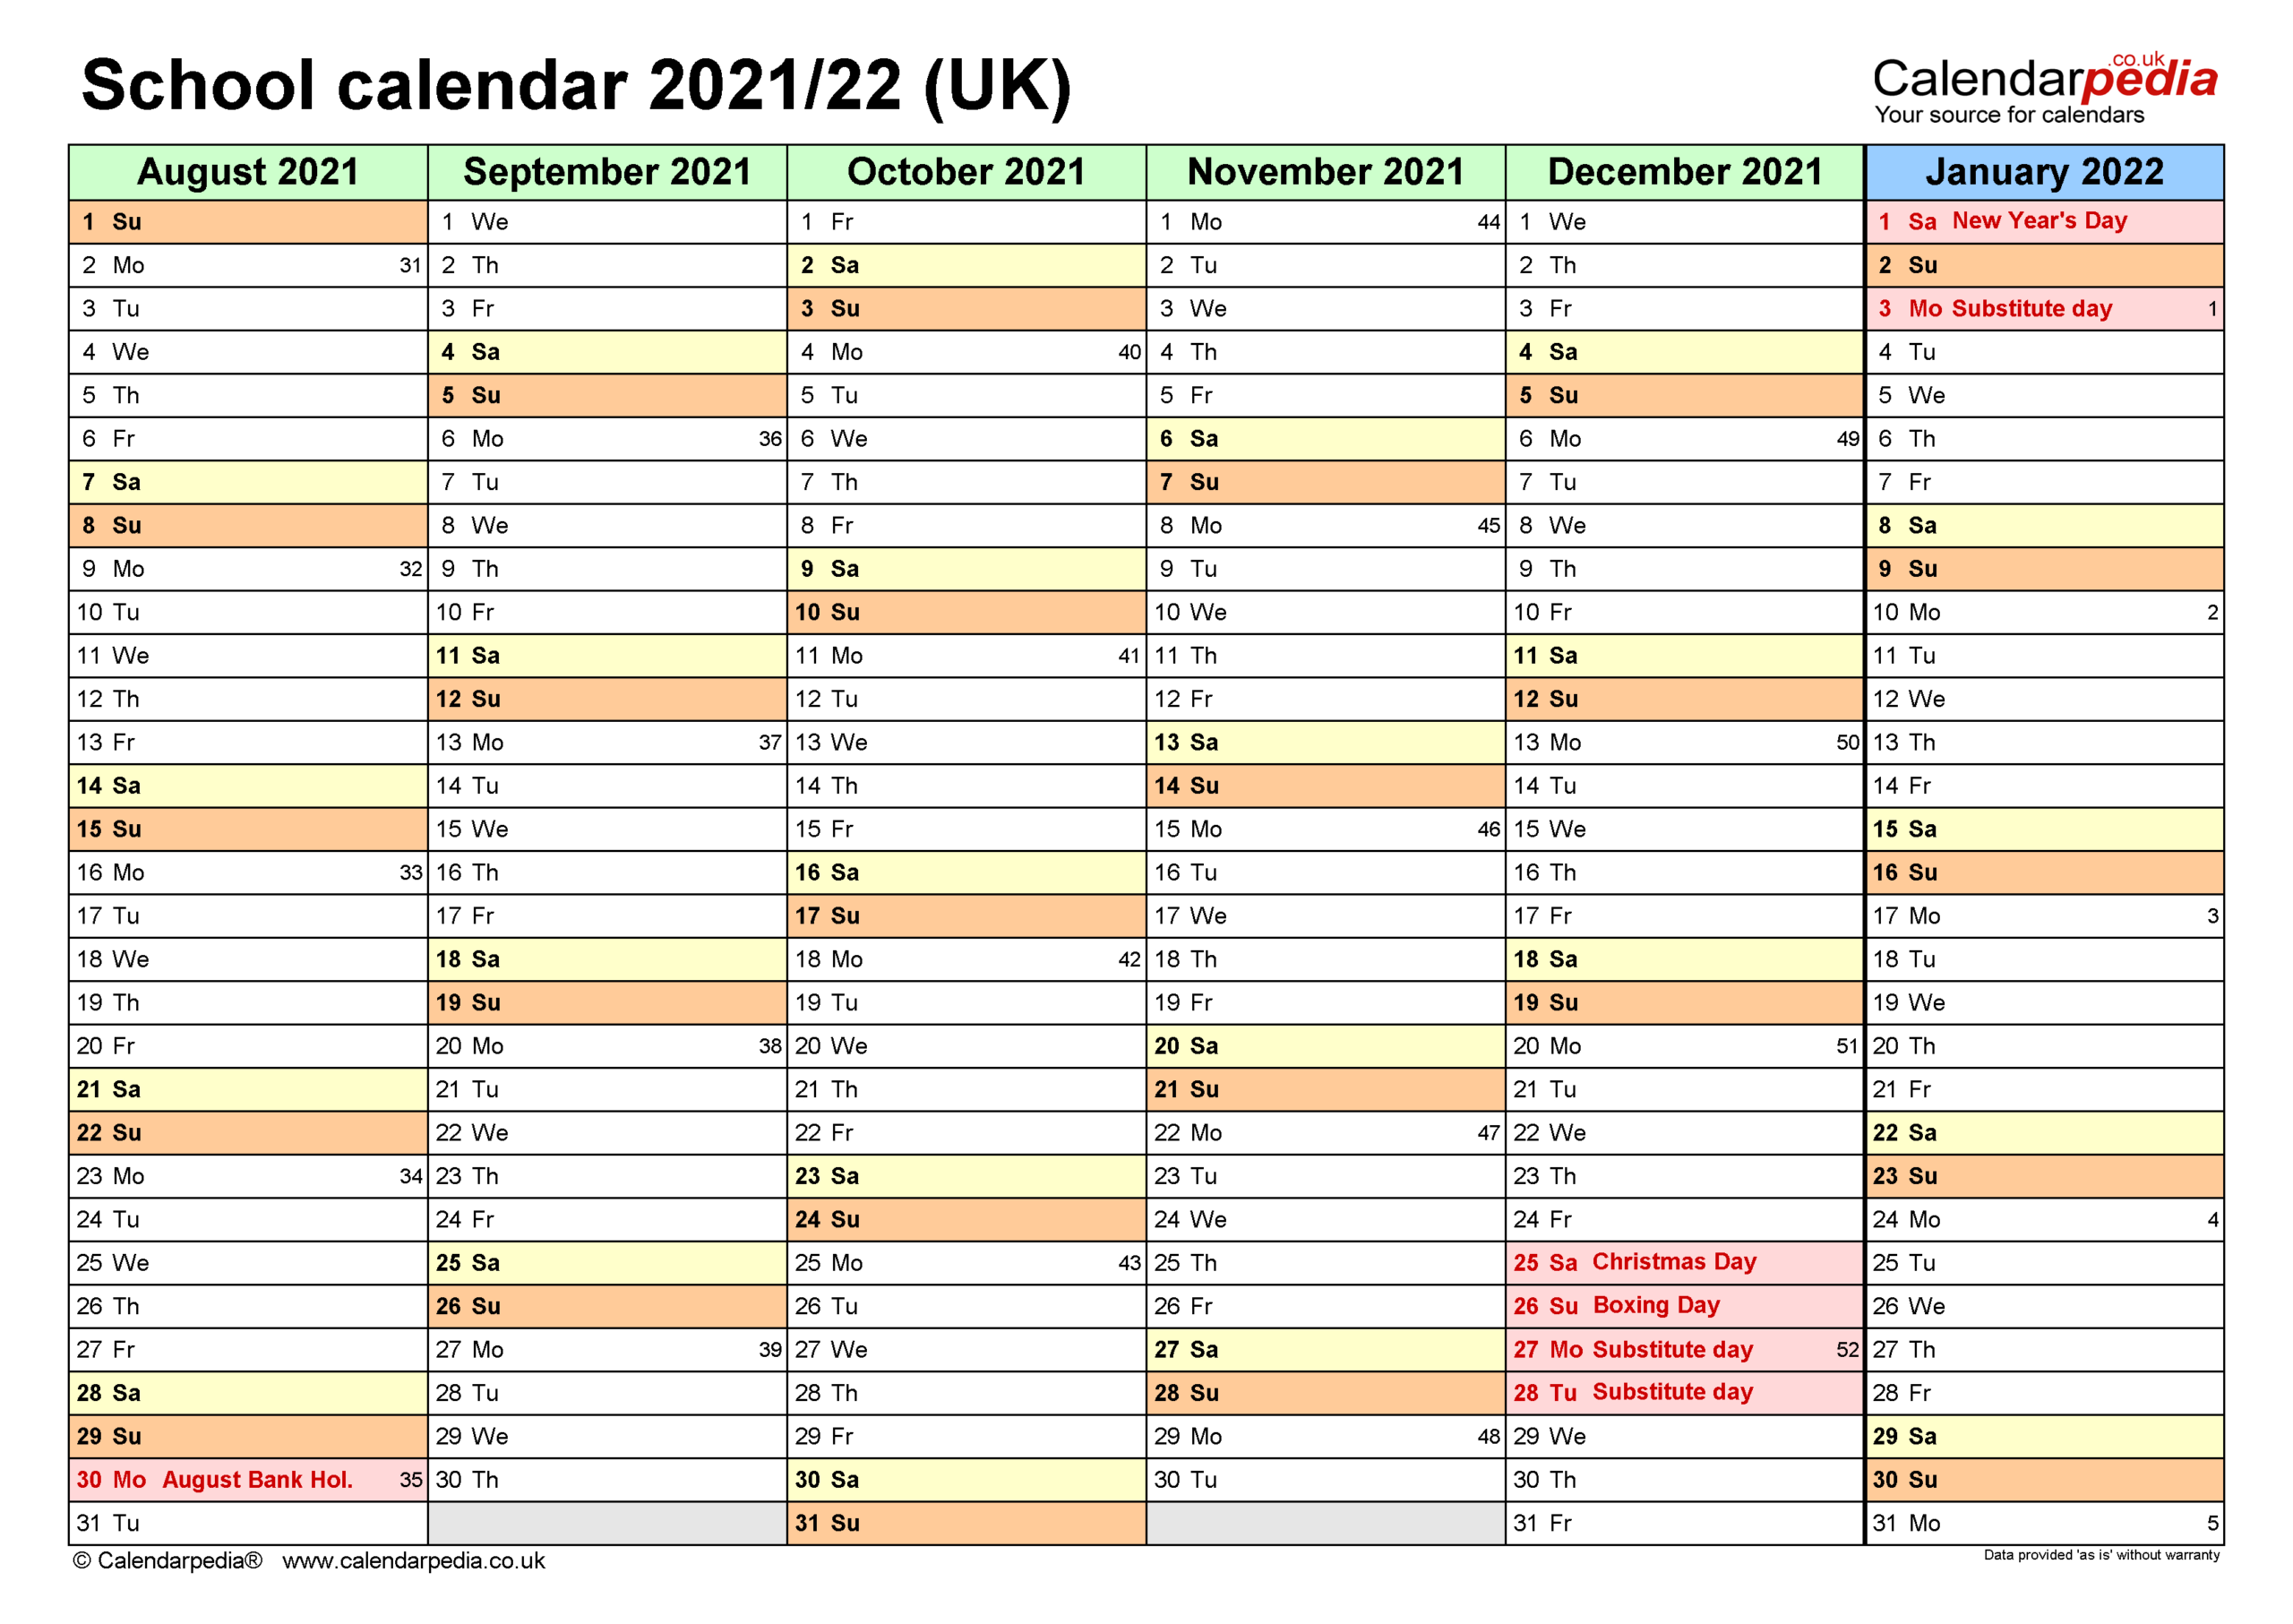 School Calendars 2021/22 Uk - Free Printable Pdf Templates-2021 Calendar 2022 Printable Uk